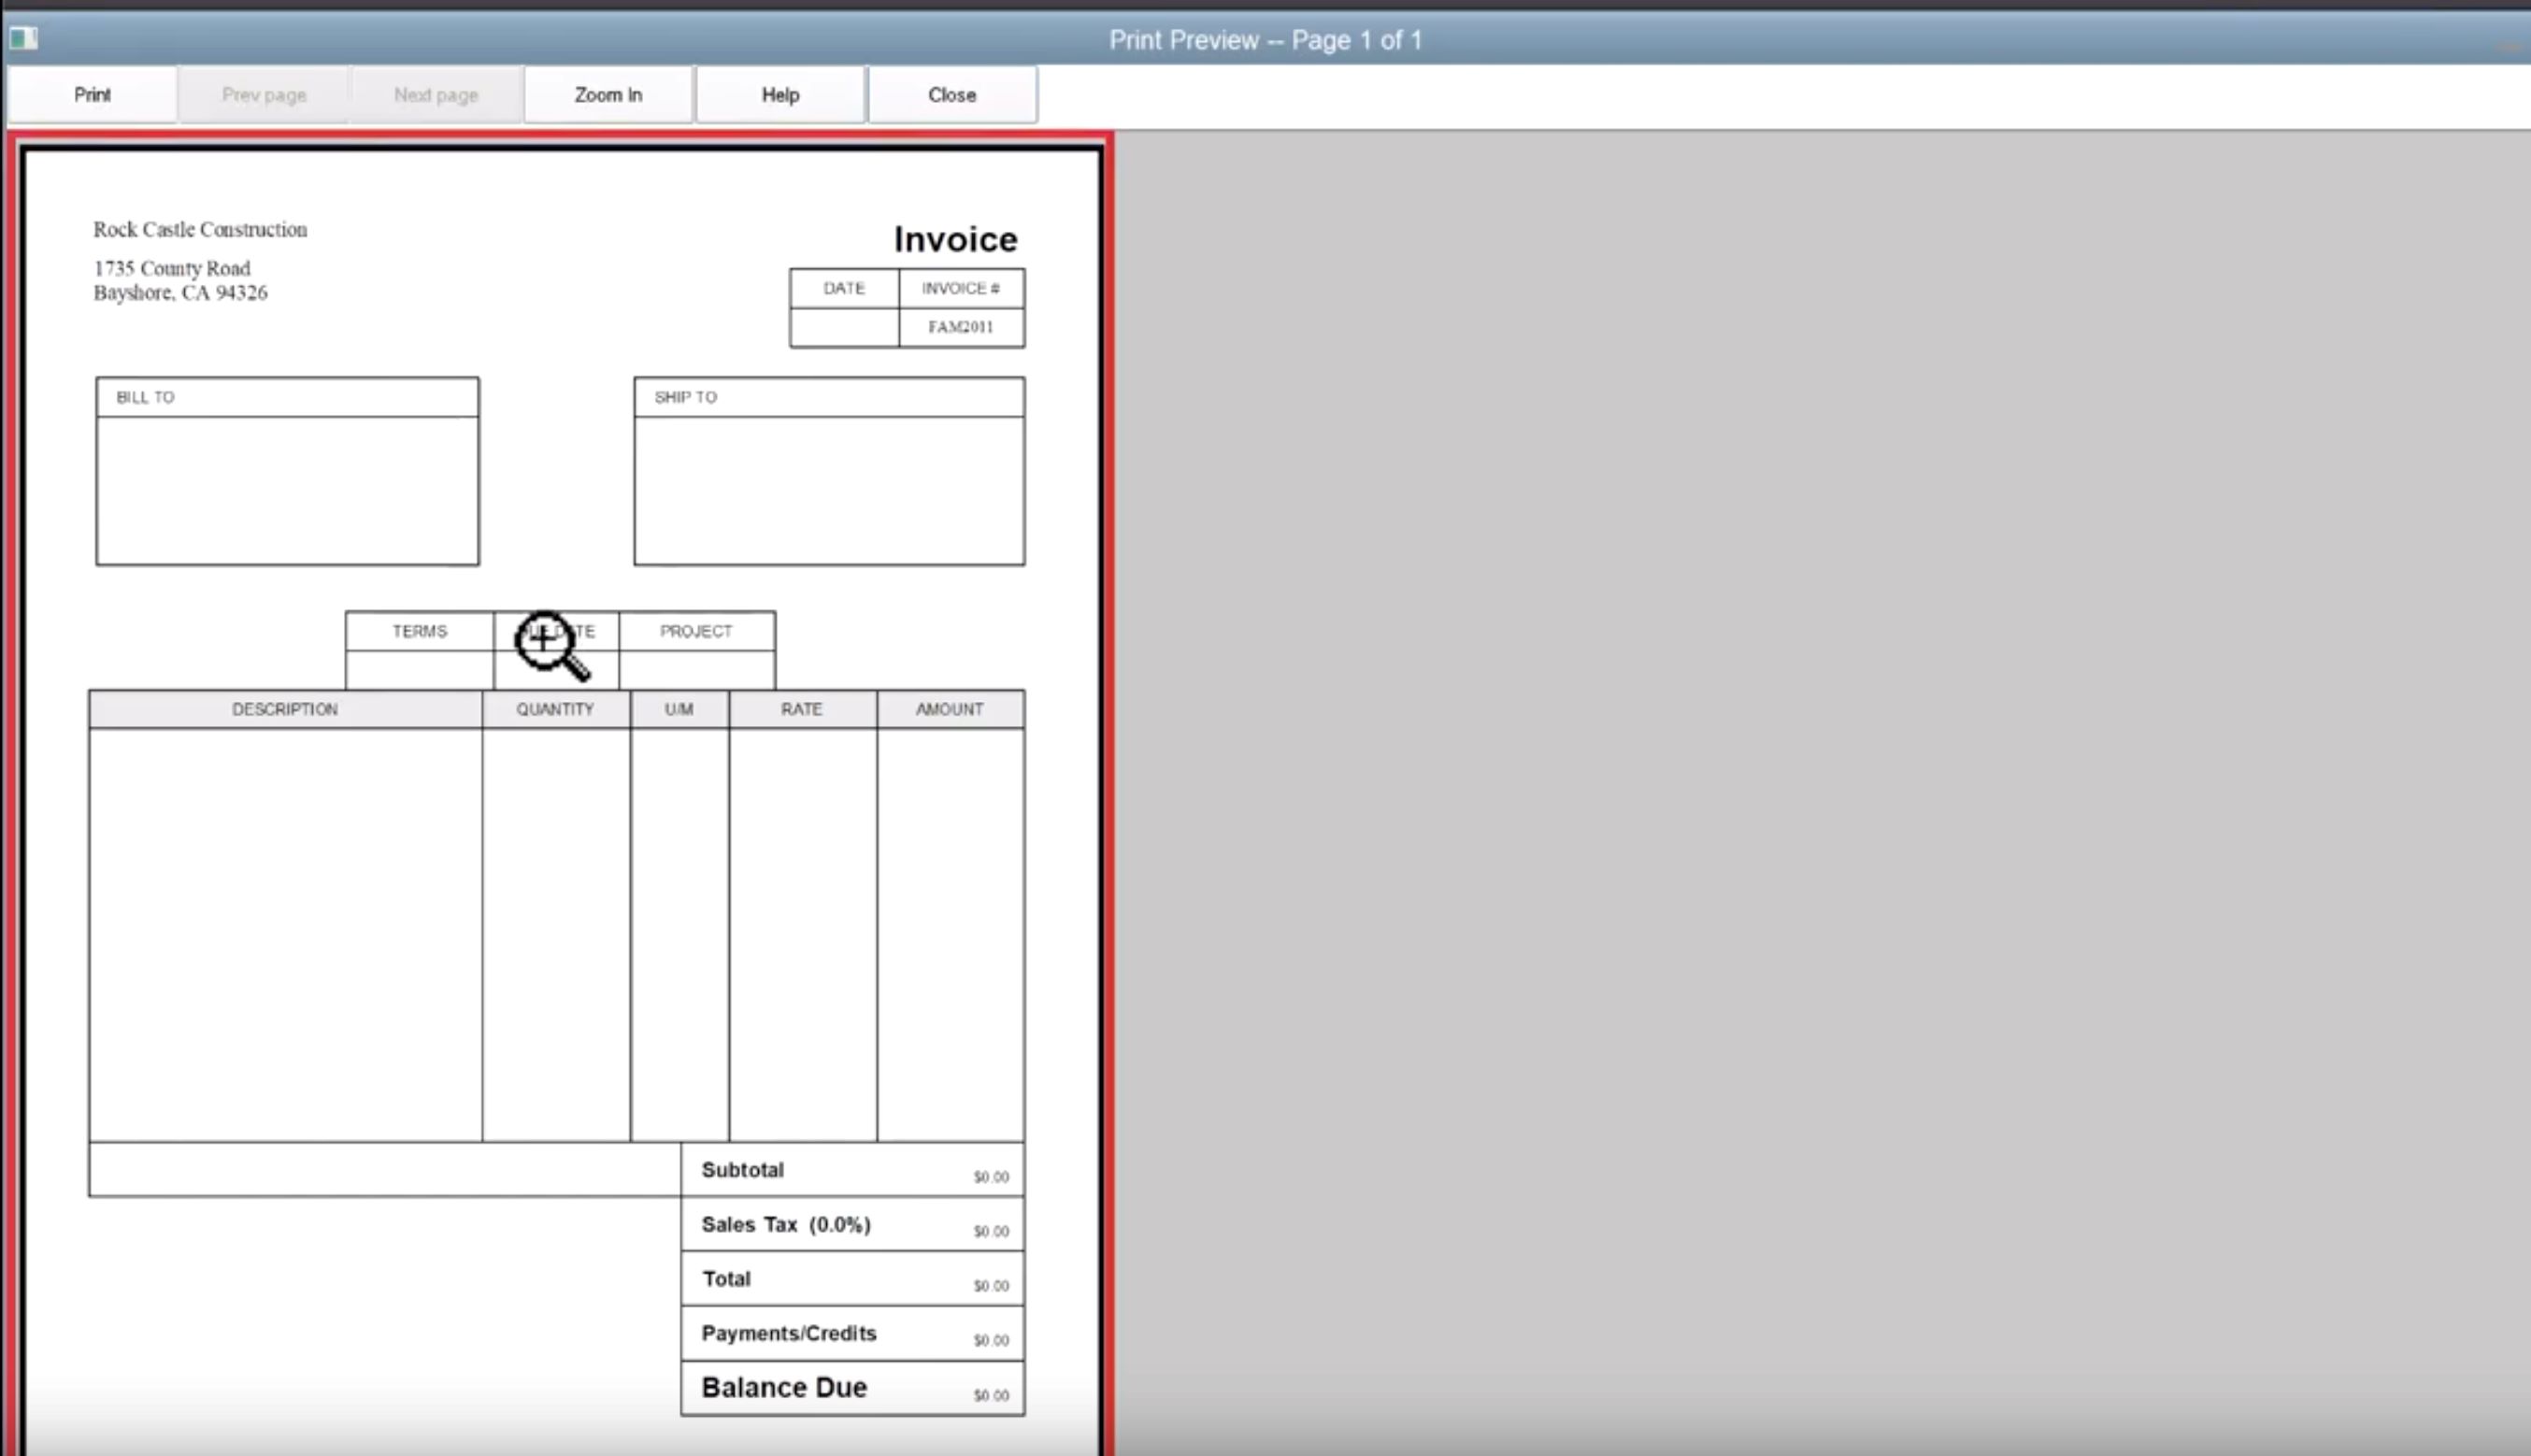 How To Edit Invoice In Quickbooks